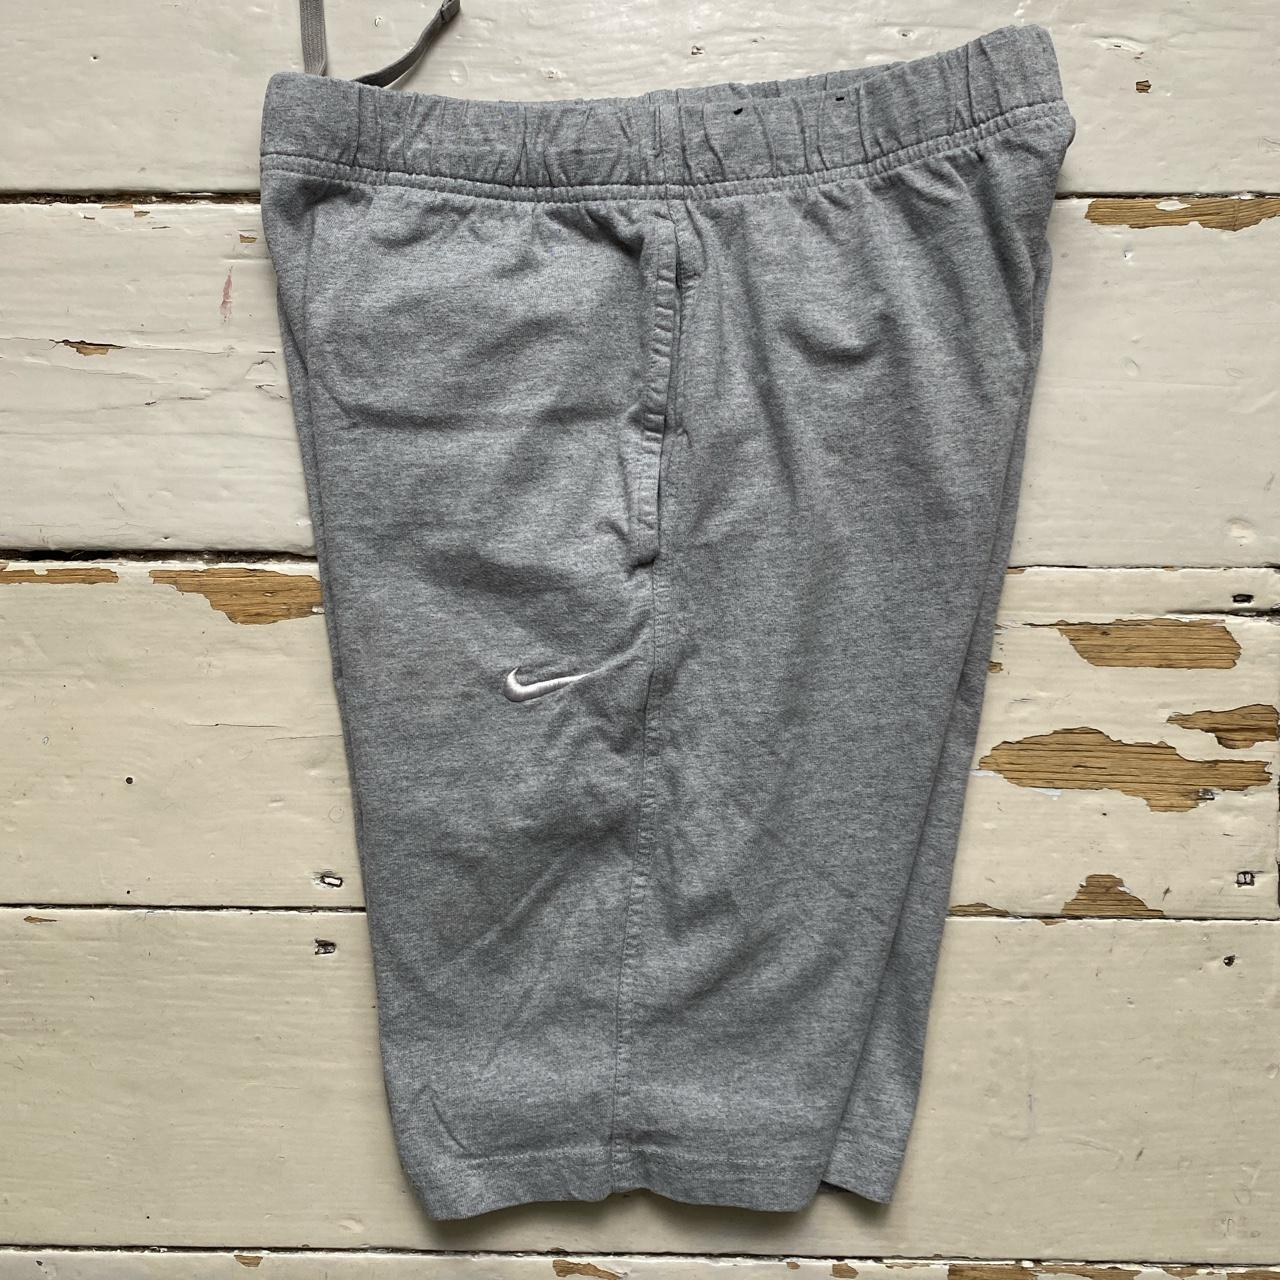 Nike Swoosh Grey and White Jogger Cotton Shorts